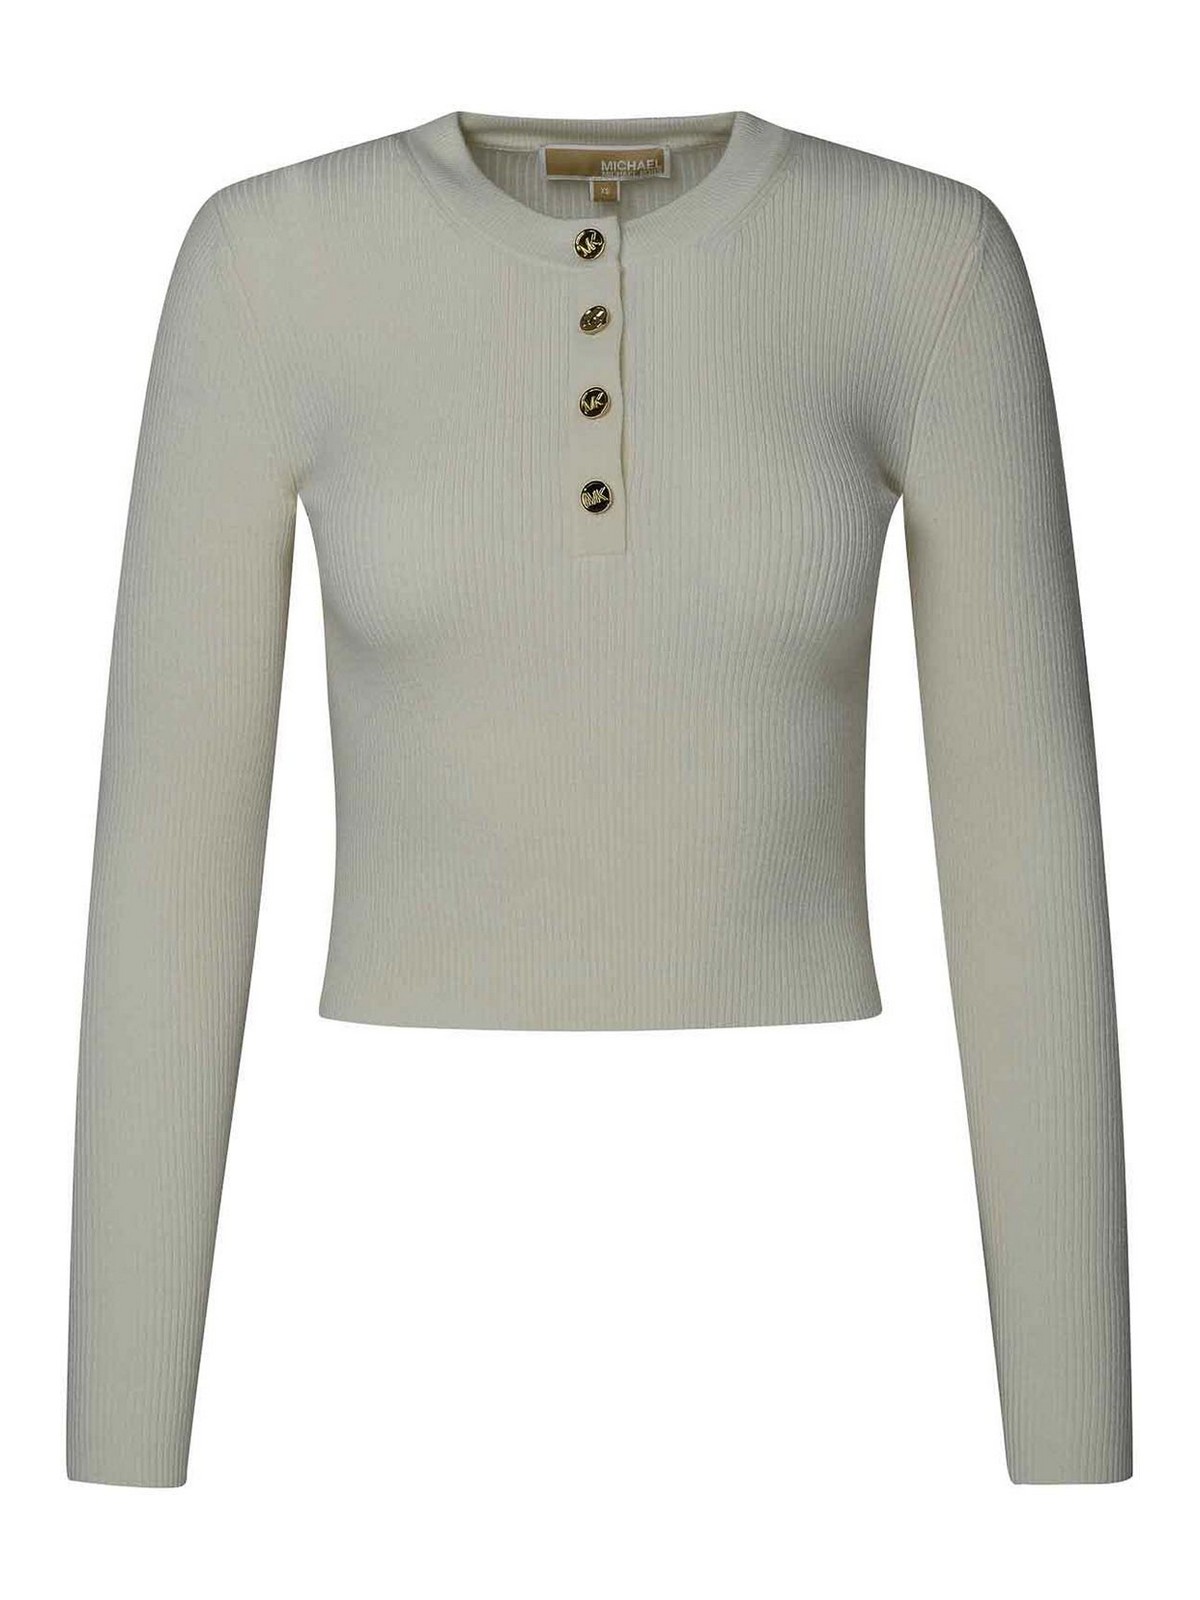 Michael Kors Cream Wool Sweater